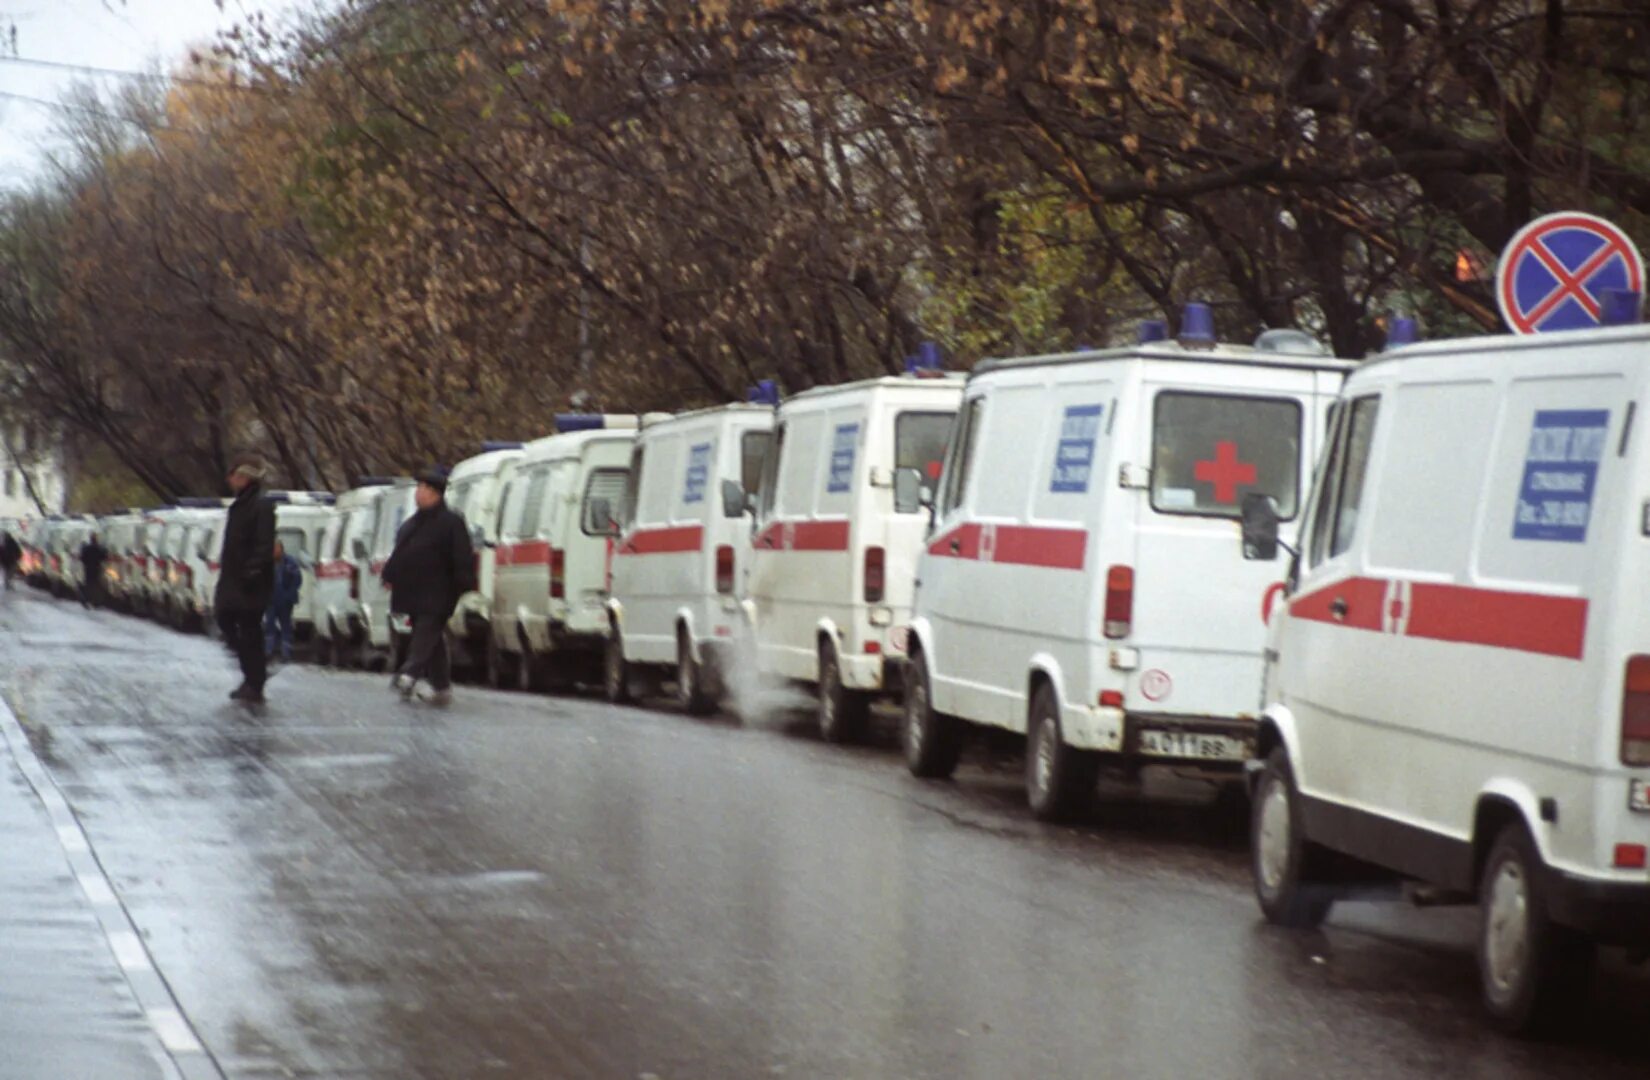 Колонна скорой помощи. Скорая Москва 2002. 23 октября 2010